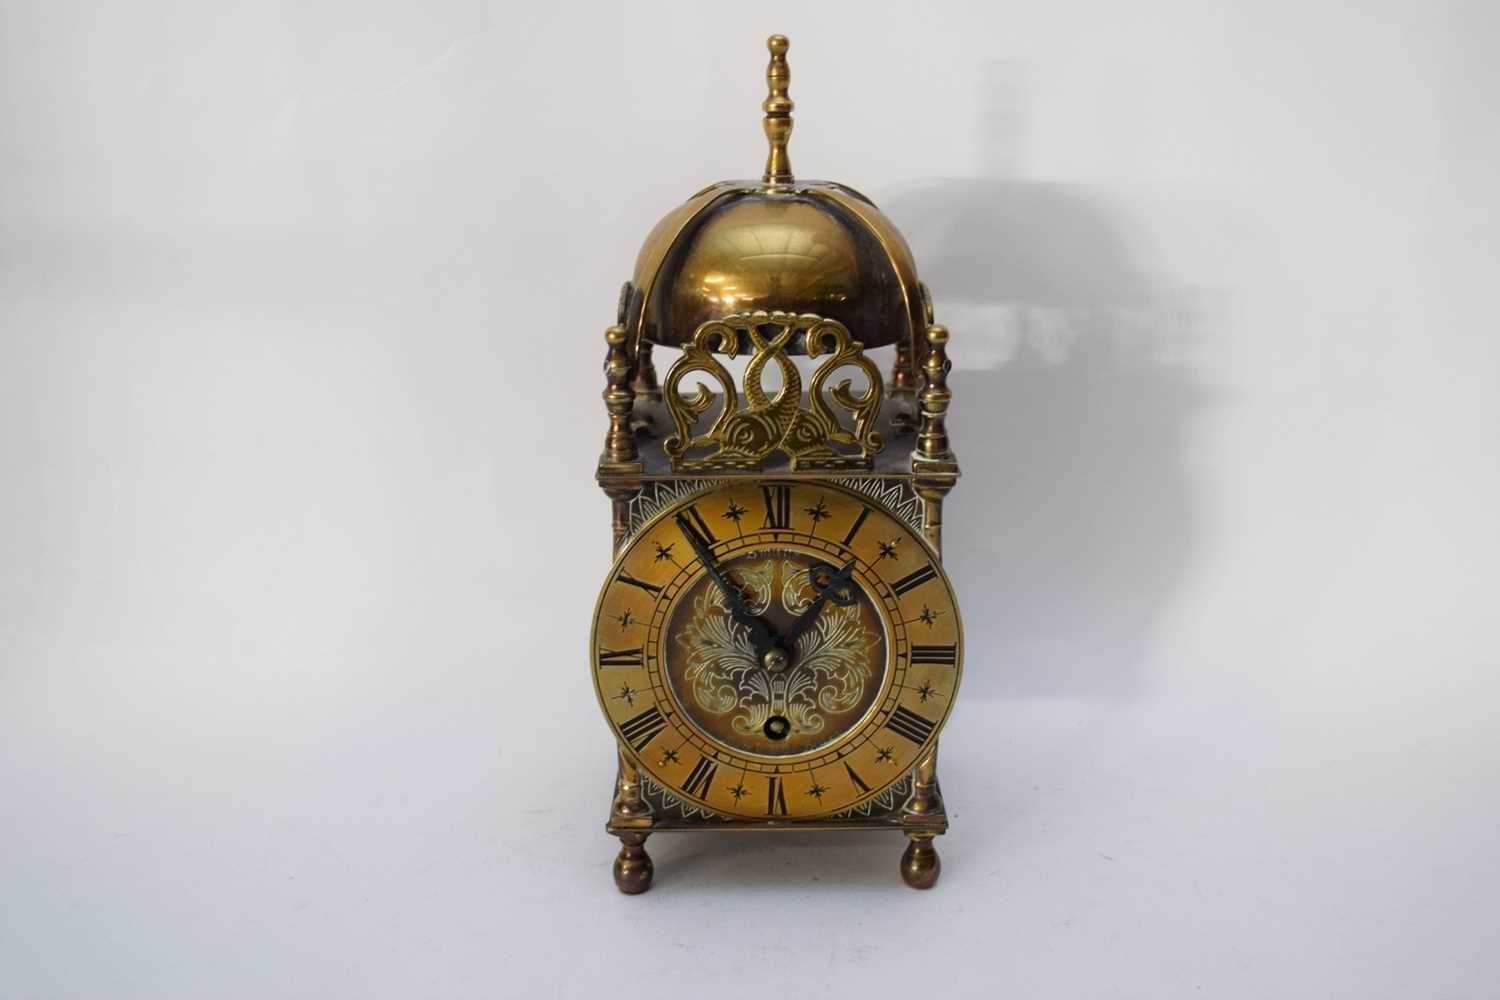 Lantern clock made by Smiths